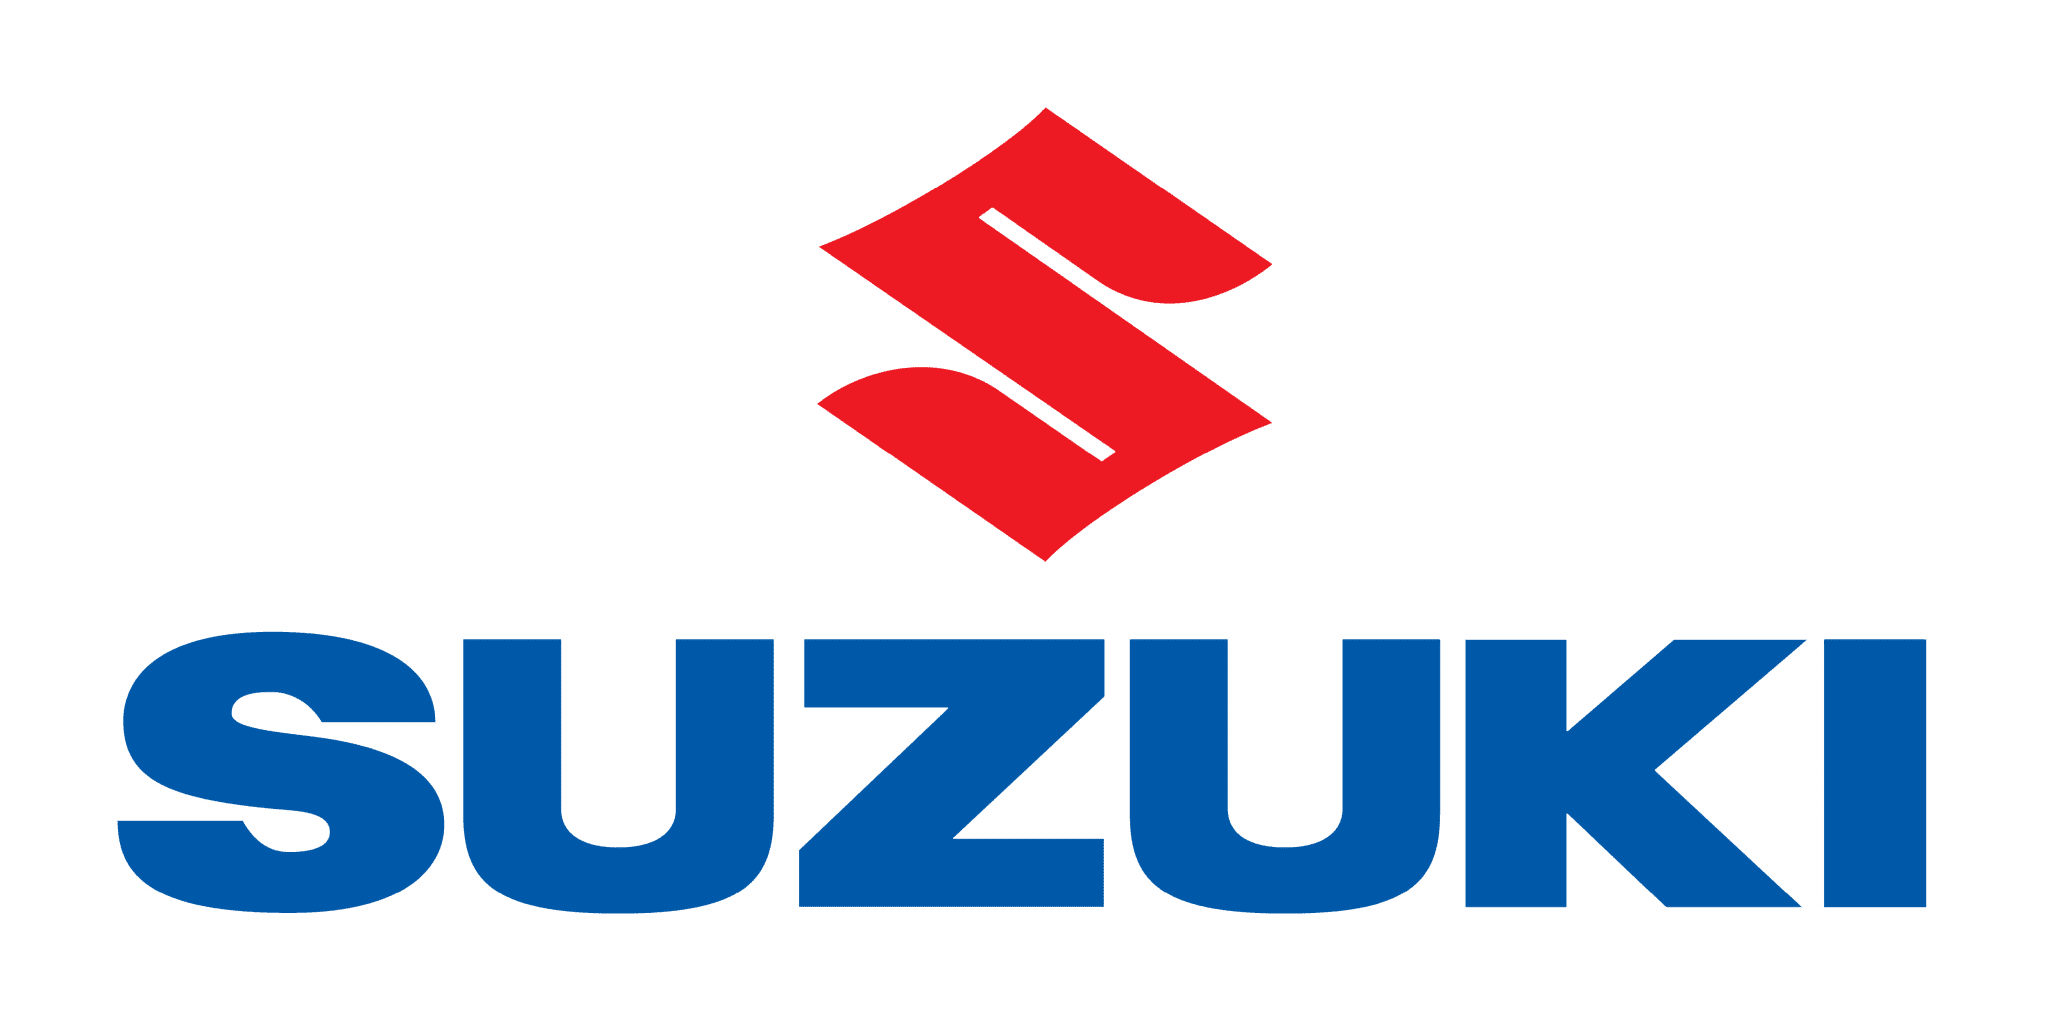 Suzuki Motorcycle Logo Wallpapers | BadAssHelmetStore